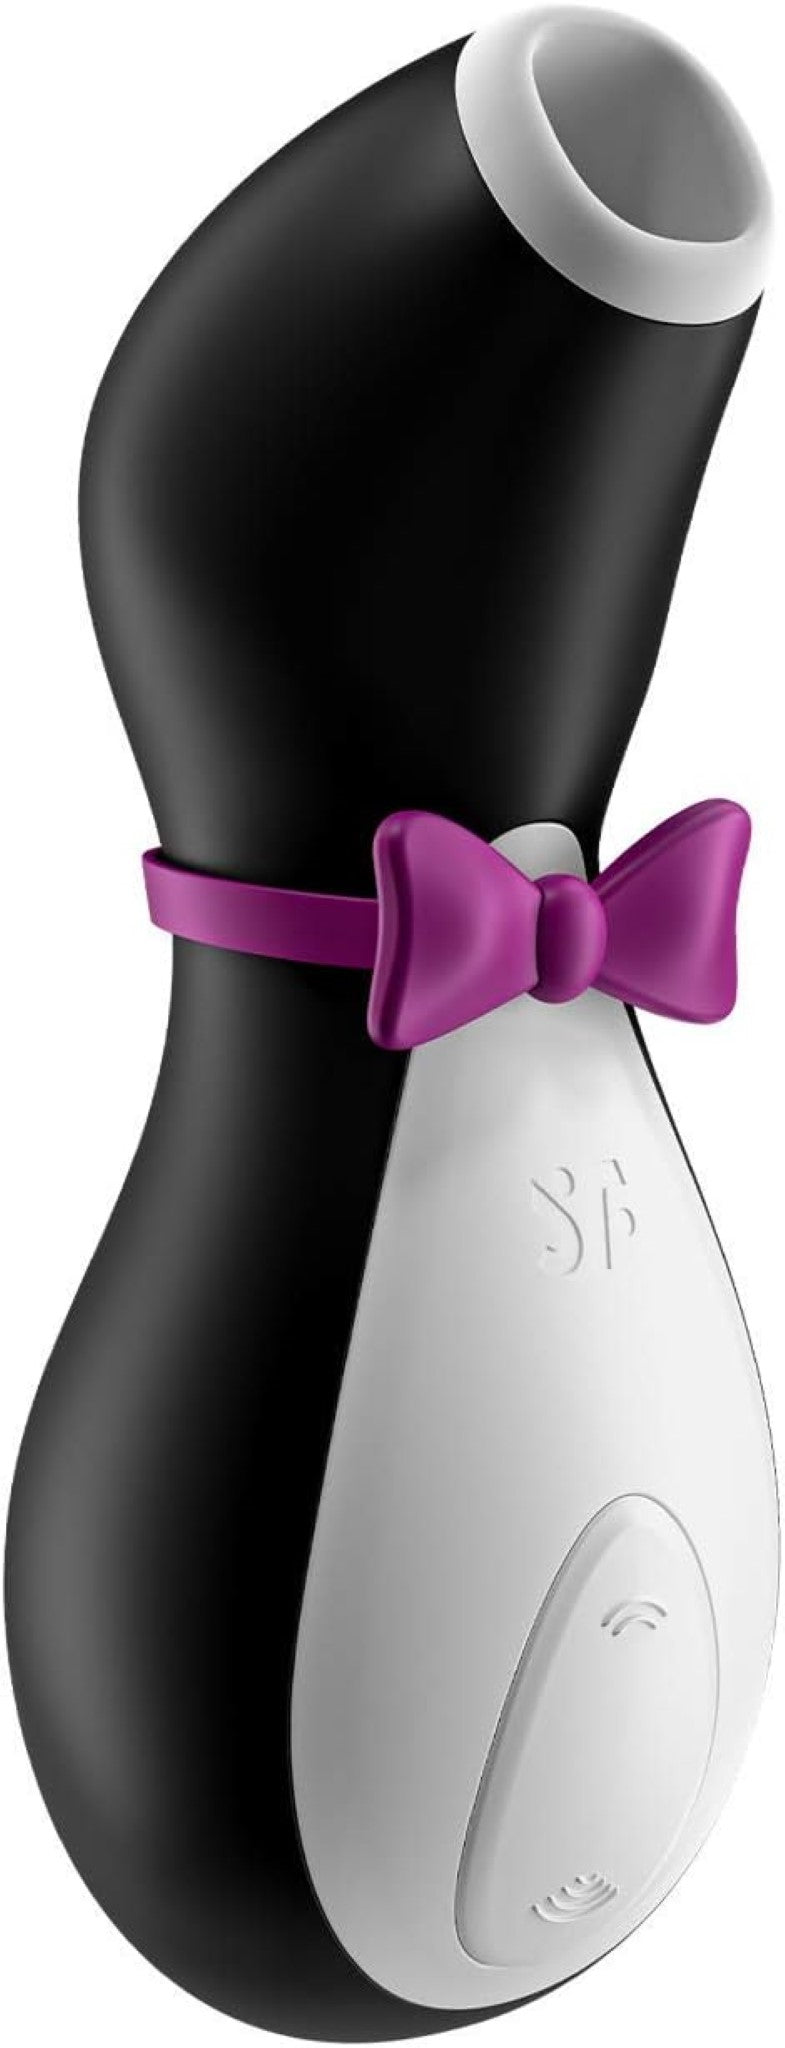 Satisfyer Pro Penguine | satisfyer suction toy